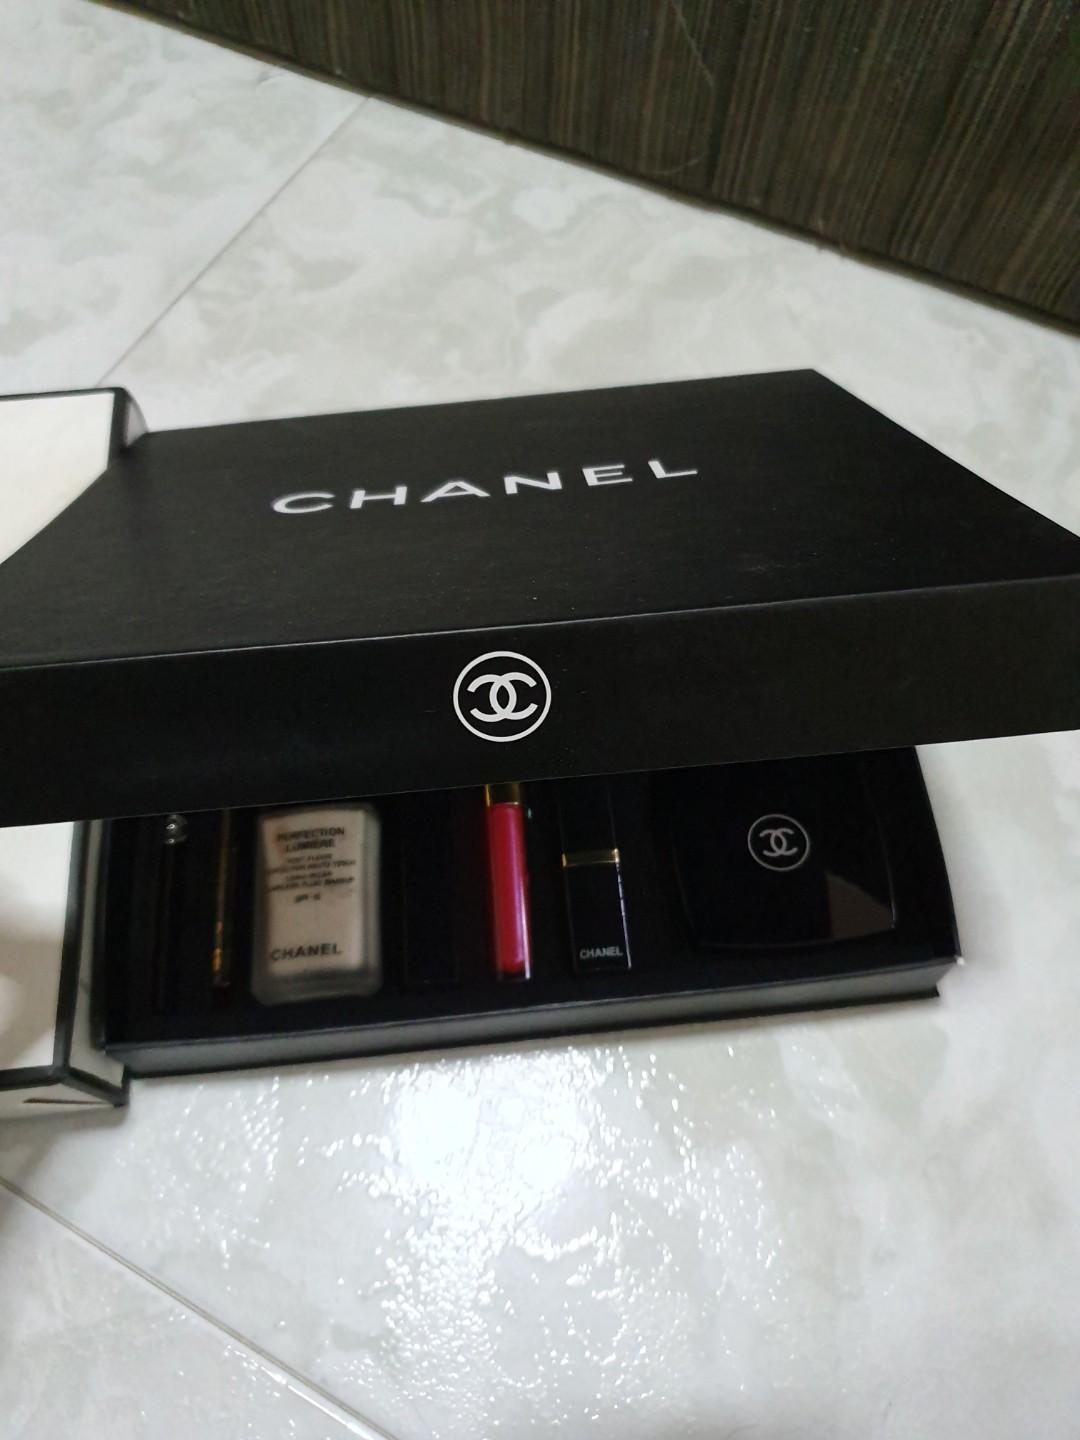 Unboxing 💯 ORI Chanel Gift Set 5 in1 [ 2 Perfume + Lipstick + Eyeliner] 